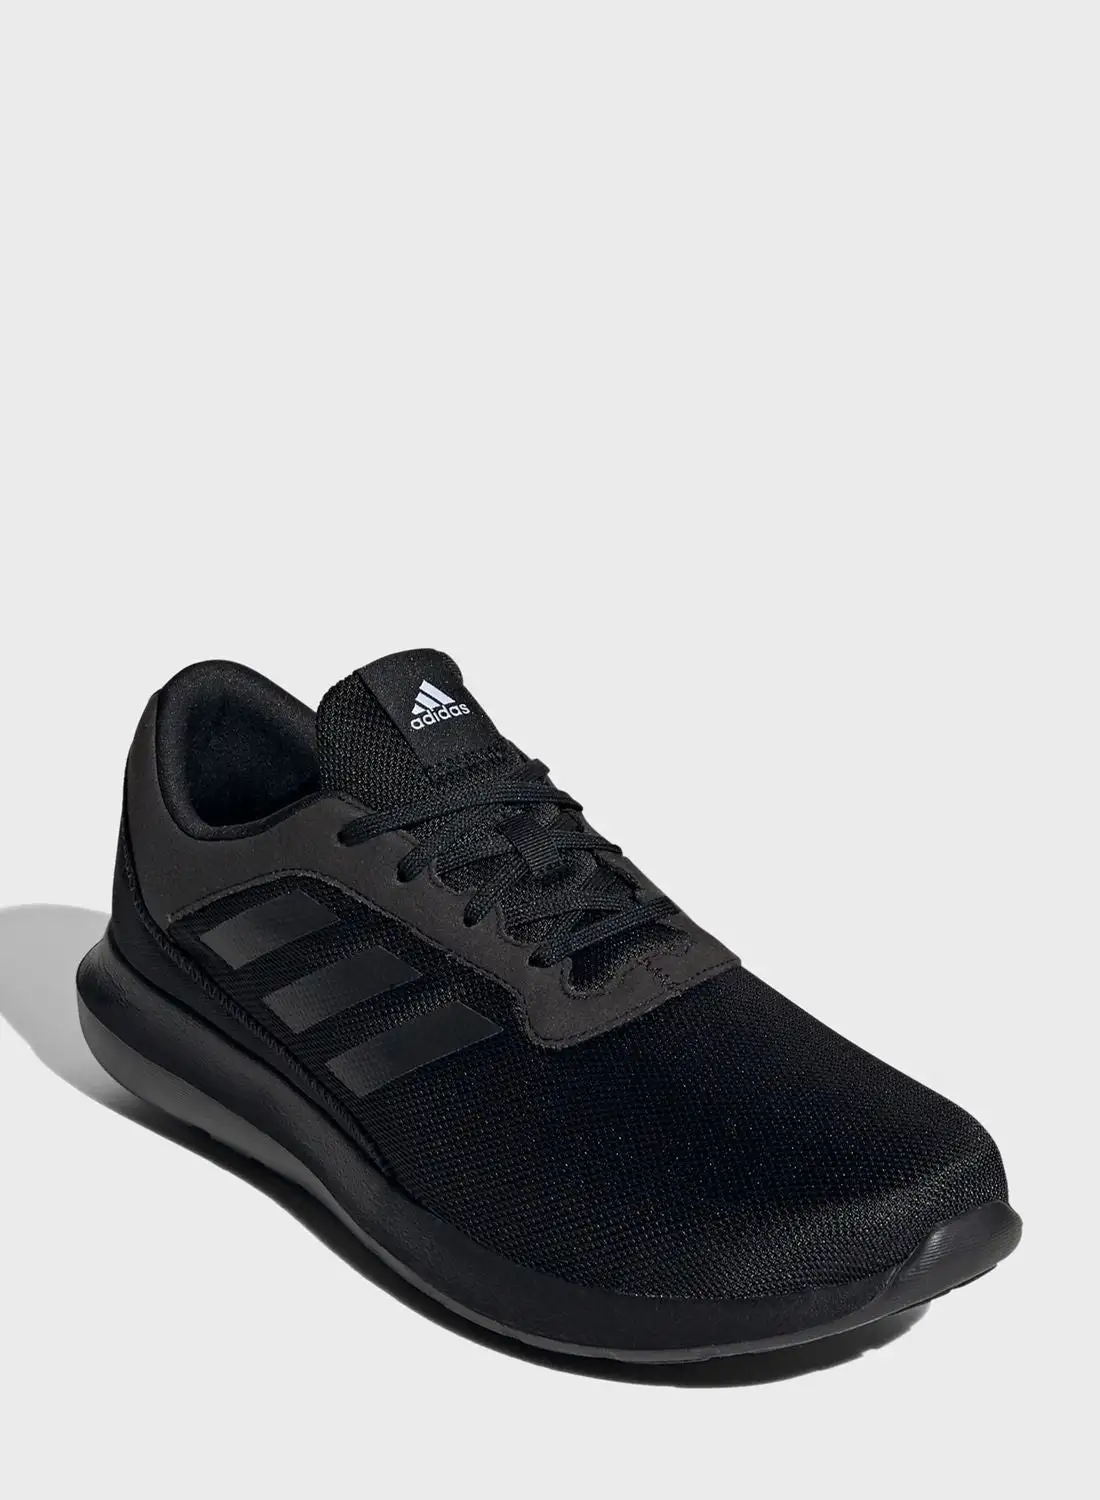 Adidas Men's Coreracer Running Shoes Black